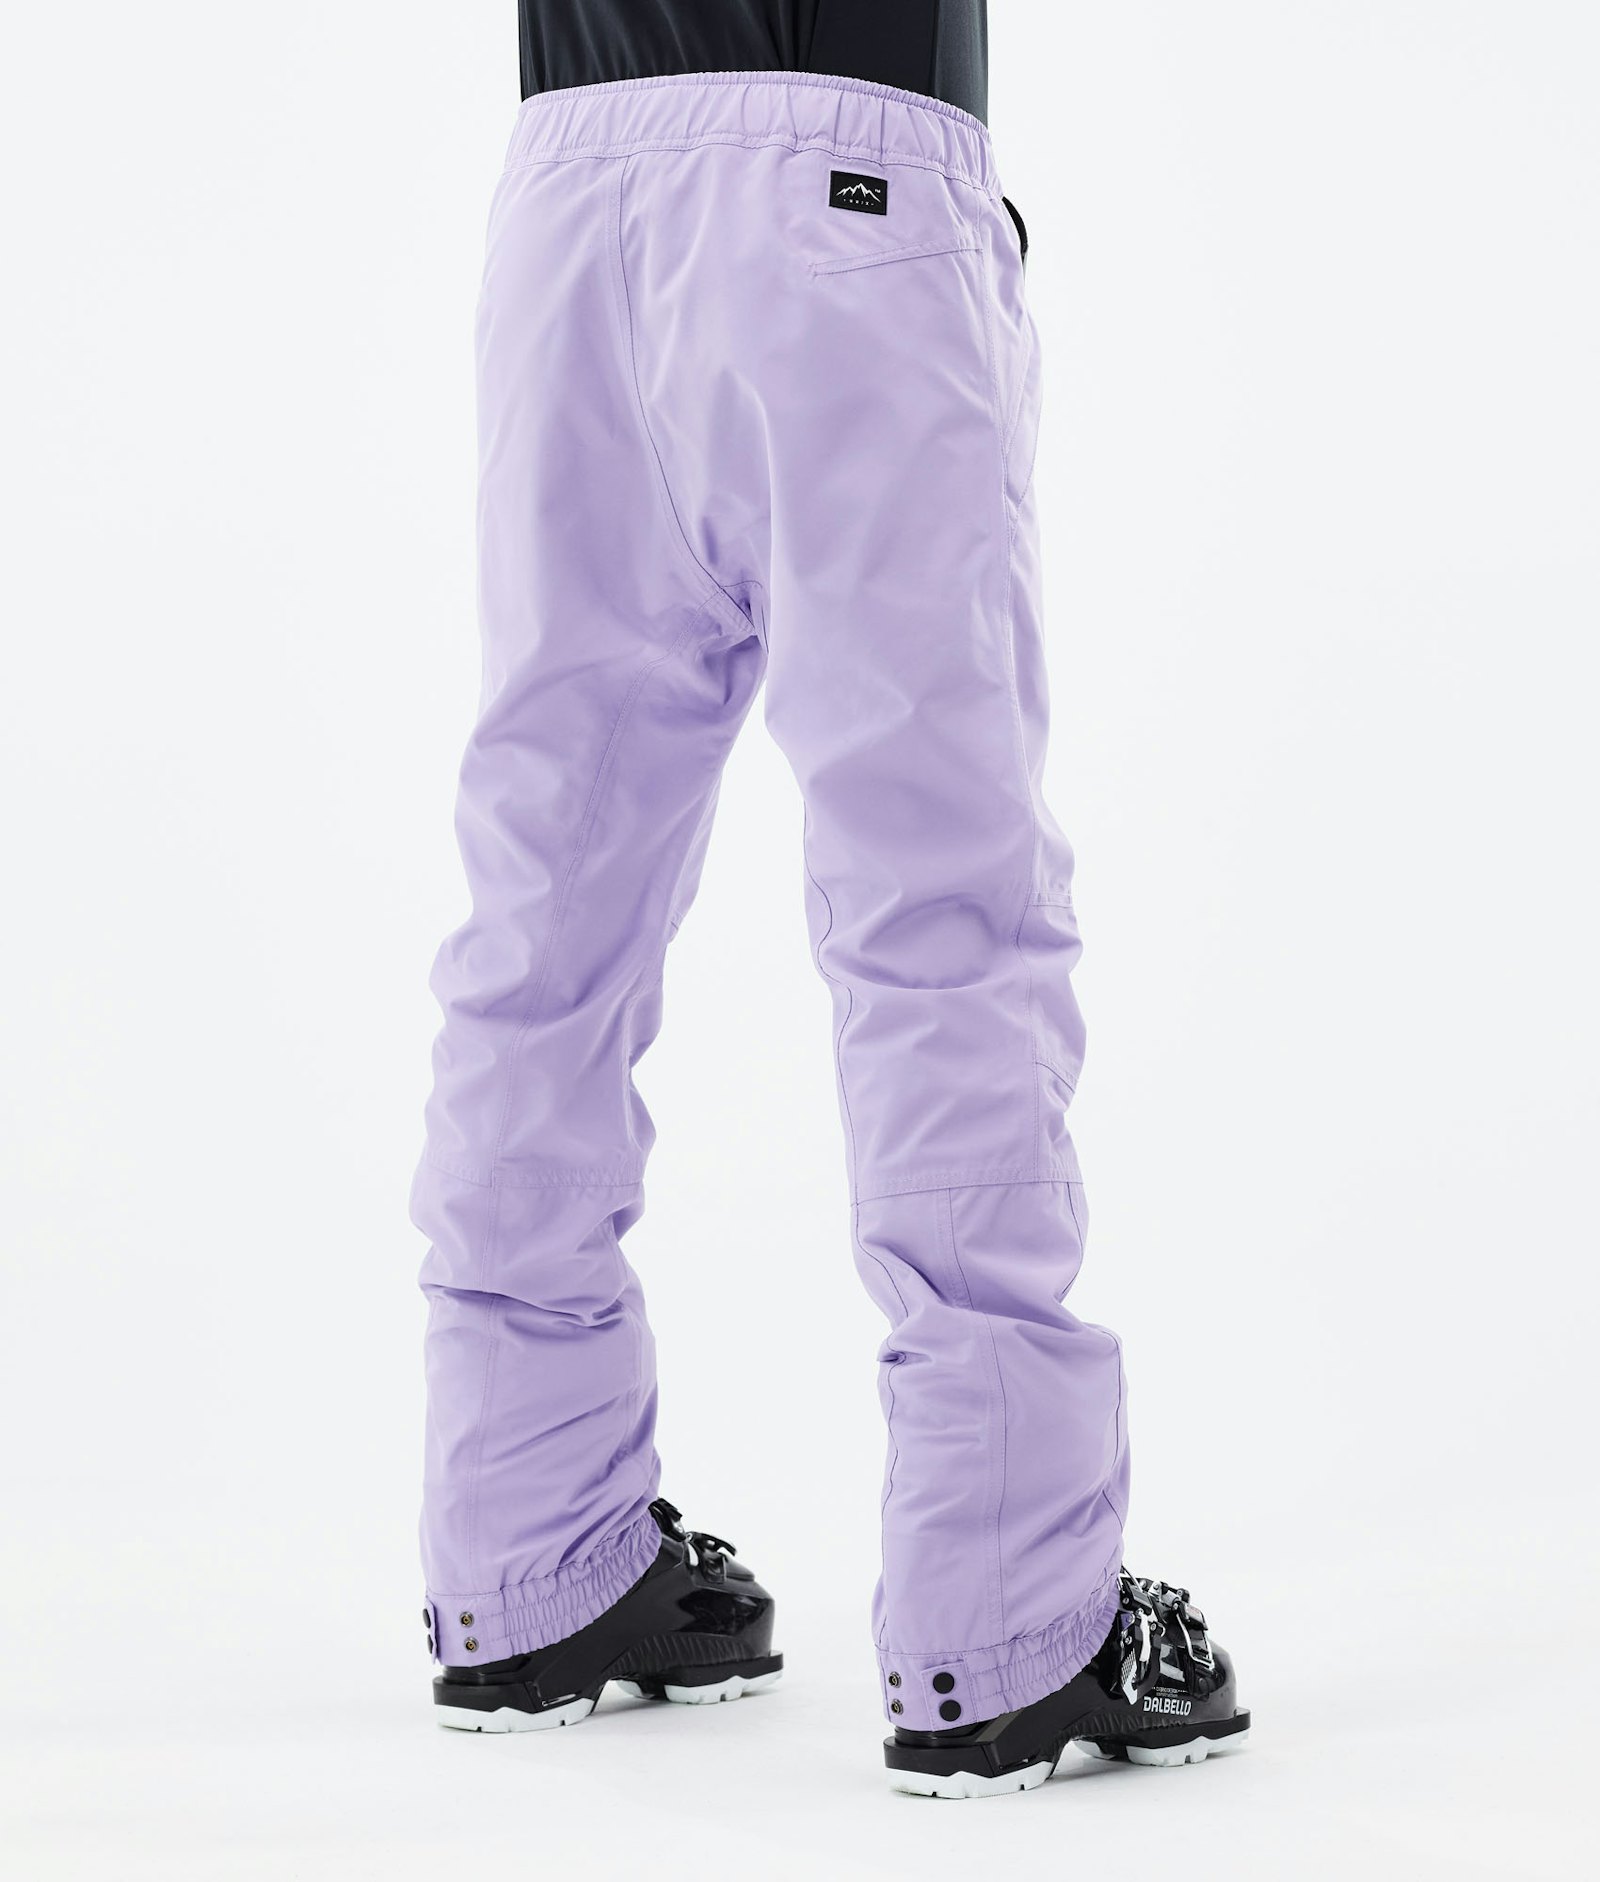 Blizzard W 2021 Pantalon de Ski Femme Faded Violet